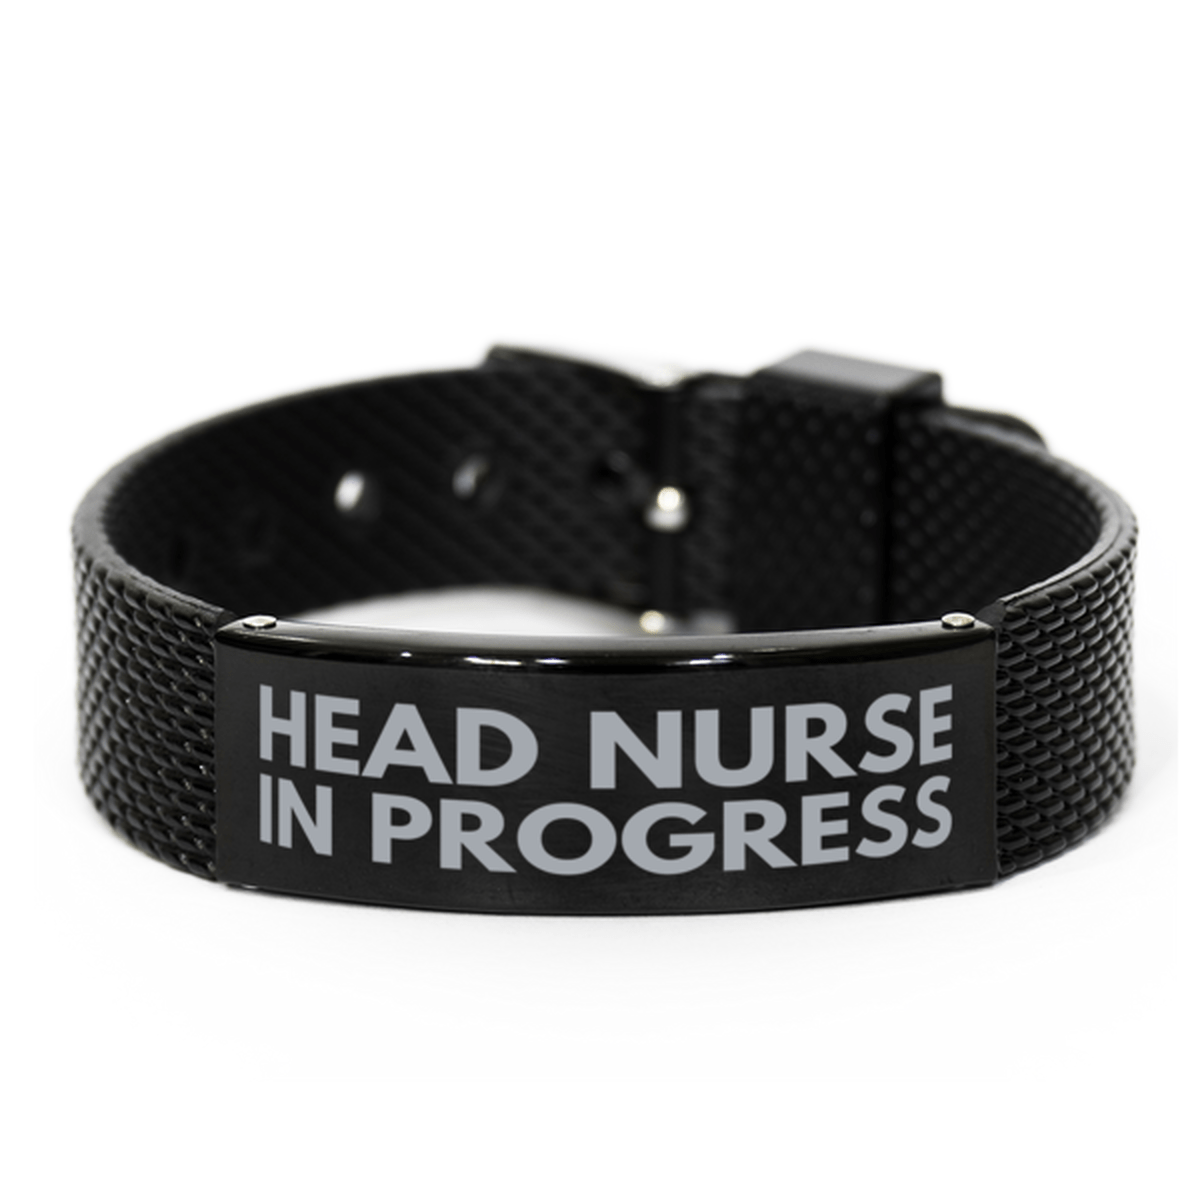 Inspirational Head Nurse Black Shark Mesh Bracelet, Head Nurse In Progress, Best Graduation Gifts for Students